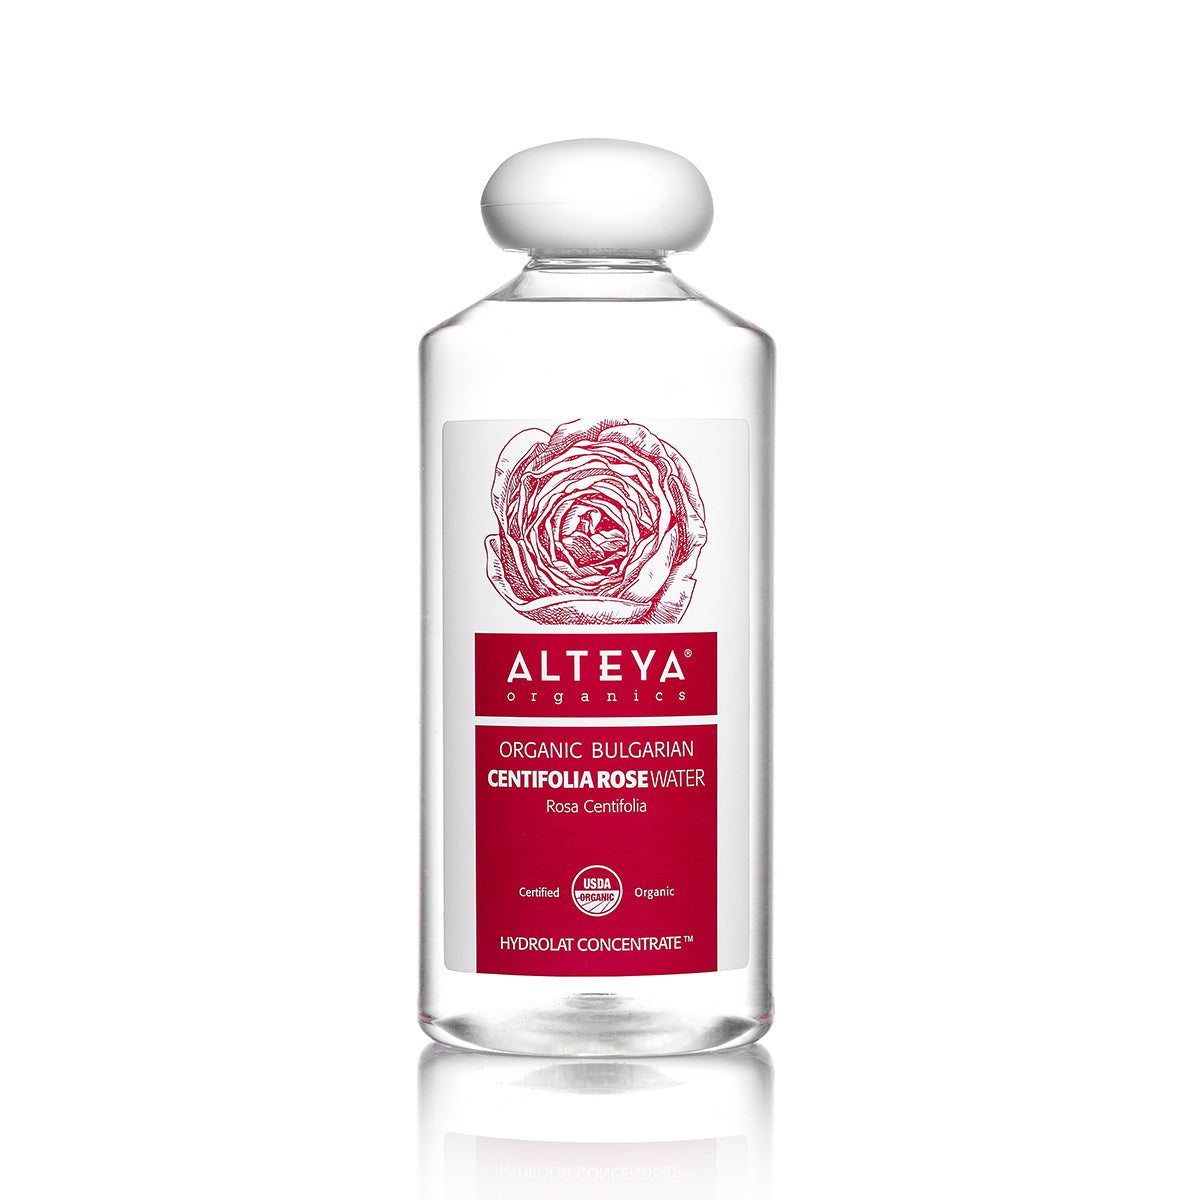 An organic bottle of Bulgarian Organic Centifolia Rose Water by Alteya Organics on a white background.